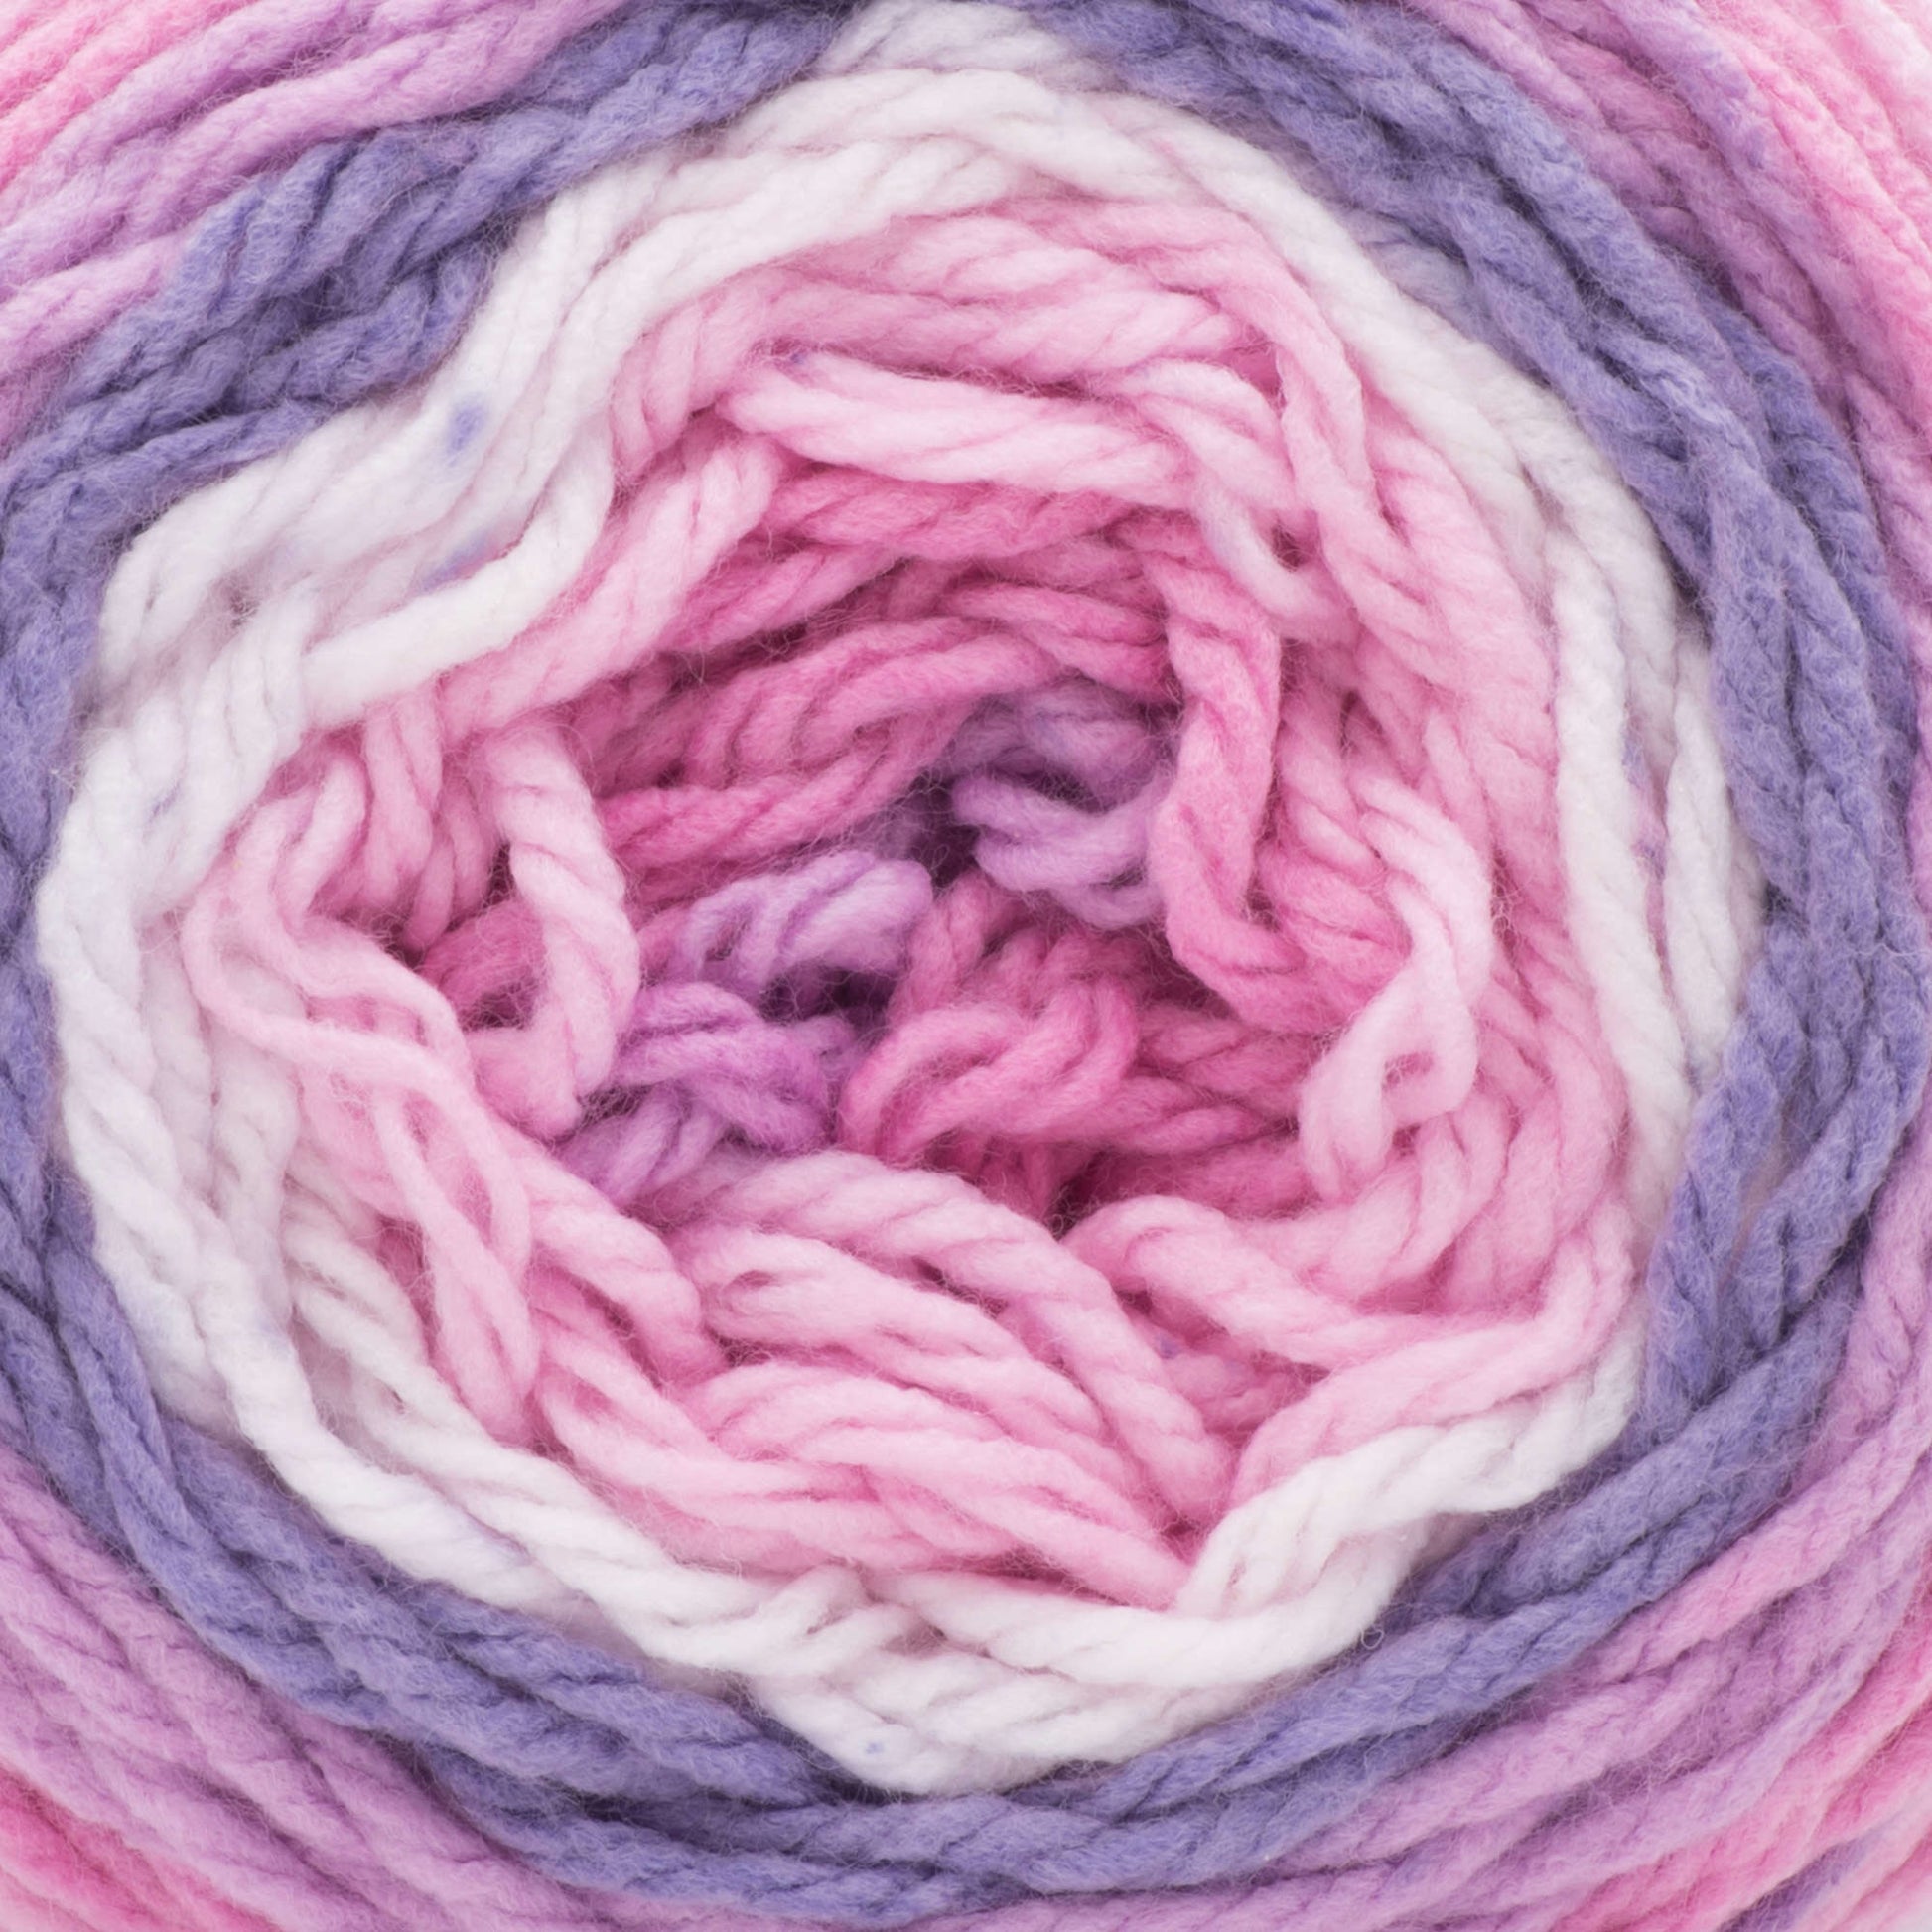 Caron Super Chunky Cakes 280g Knitting Crochet Yarn 100% Acrylic 